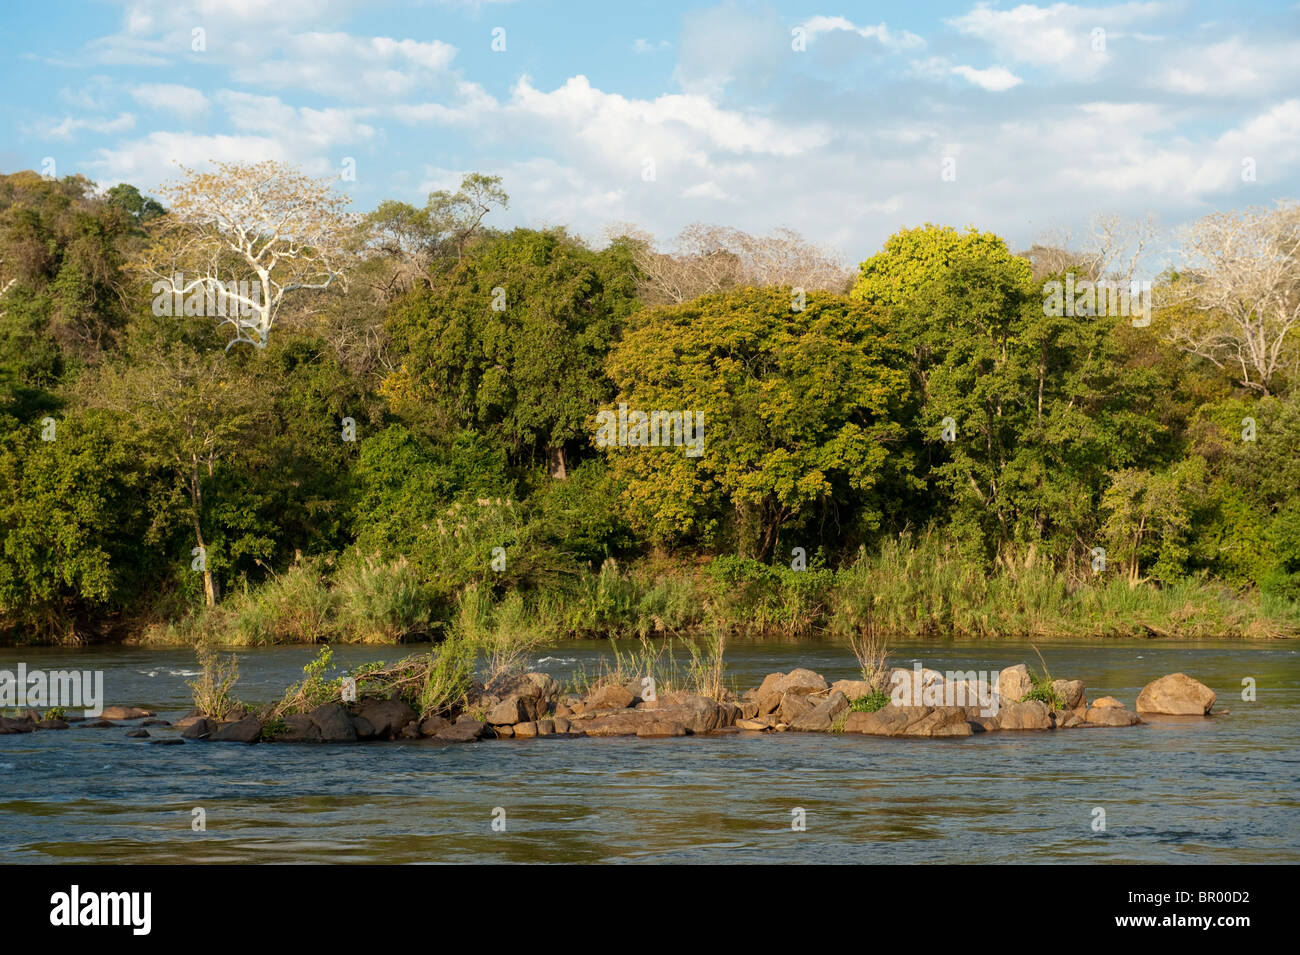 Shire river, Majete Wildlife Reserve, Malawi Stock Photo